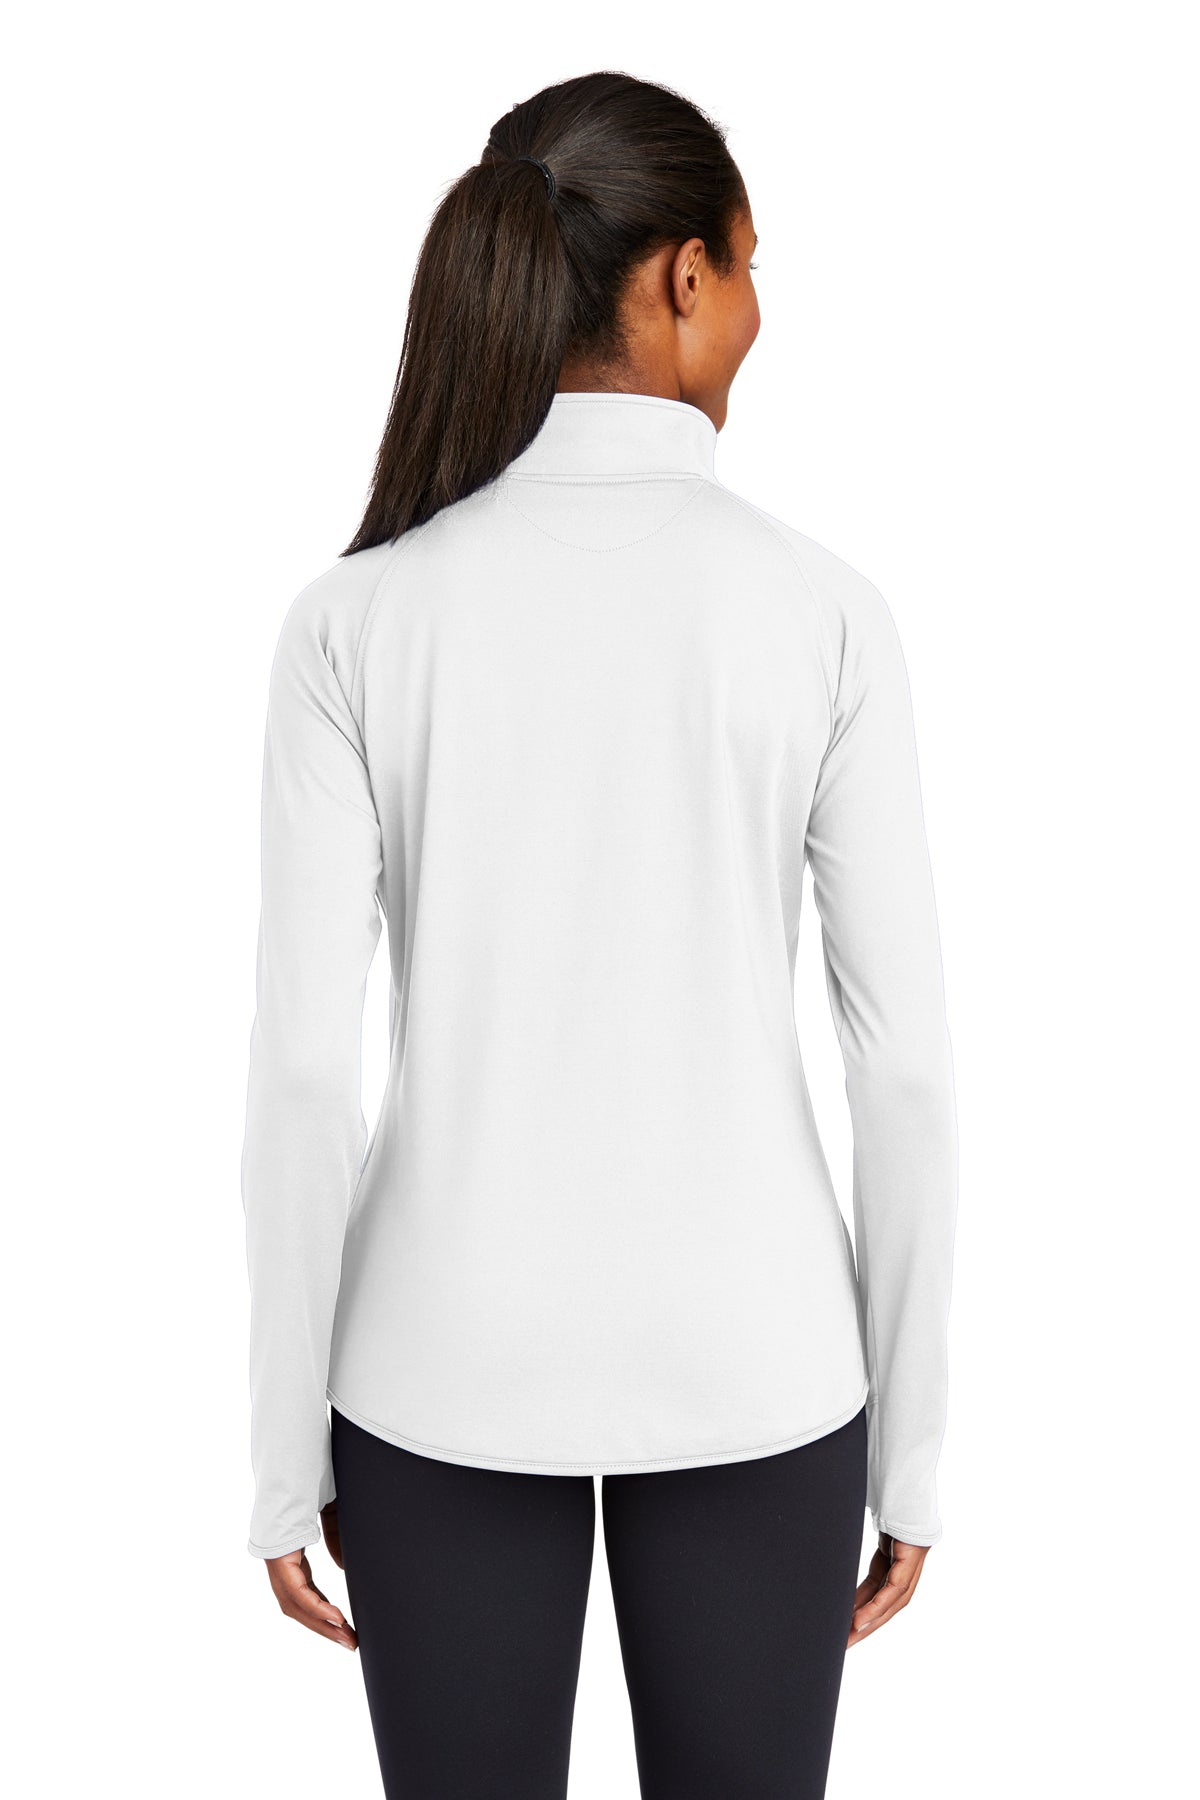 FiA Sport-Tek Ladies Sport-Wick Stretch 1/4-Zip Pullover - Made to Order